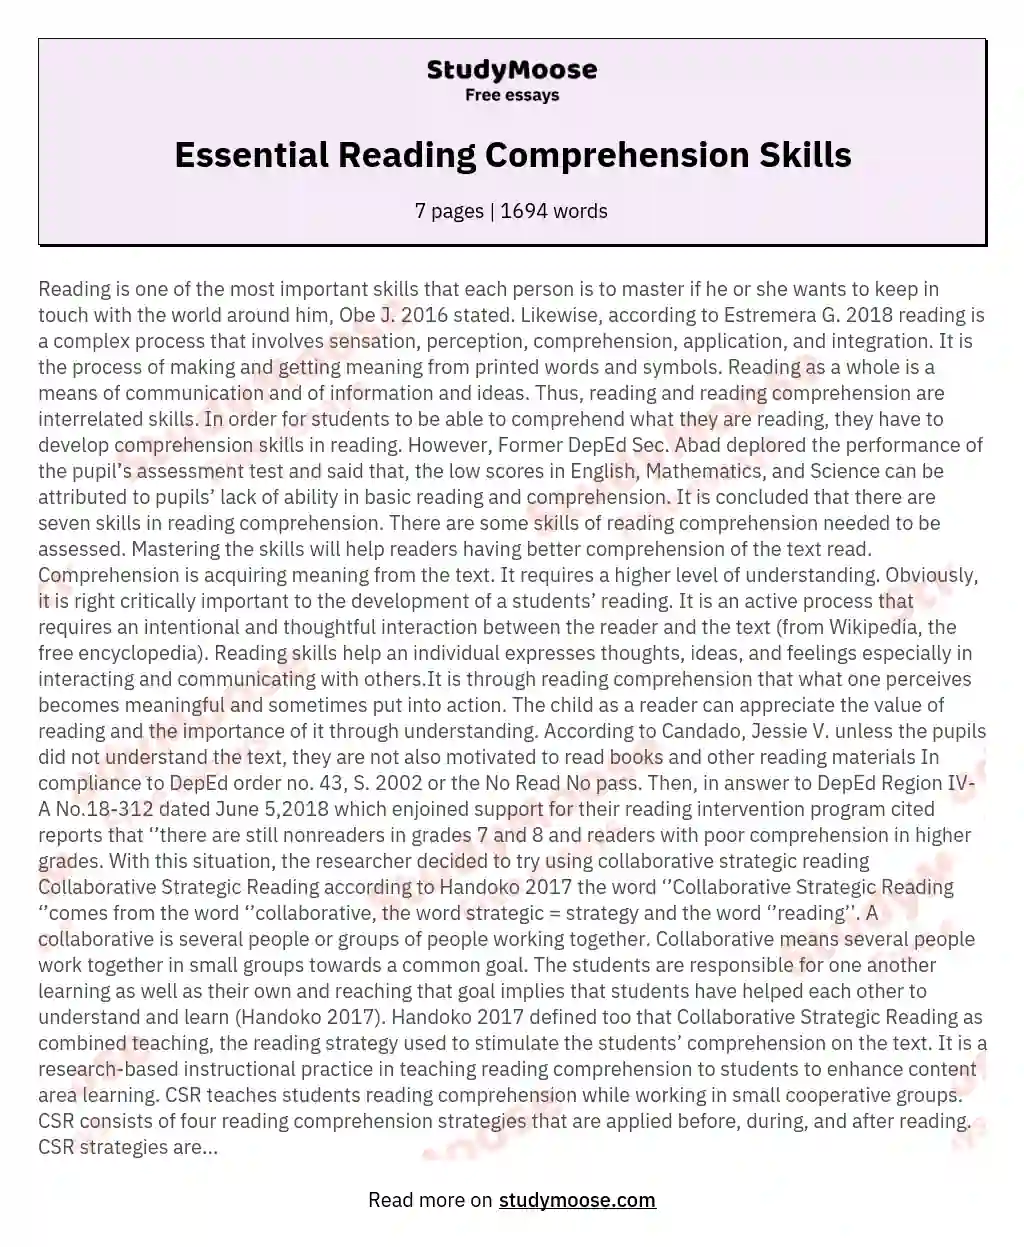 Essential Reading Comprehension Skills essay